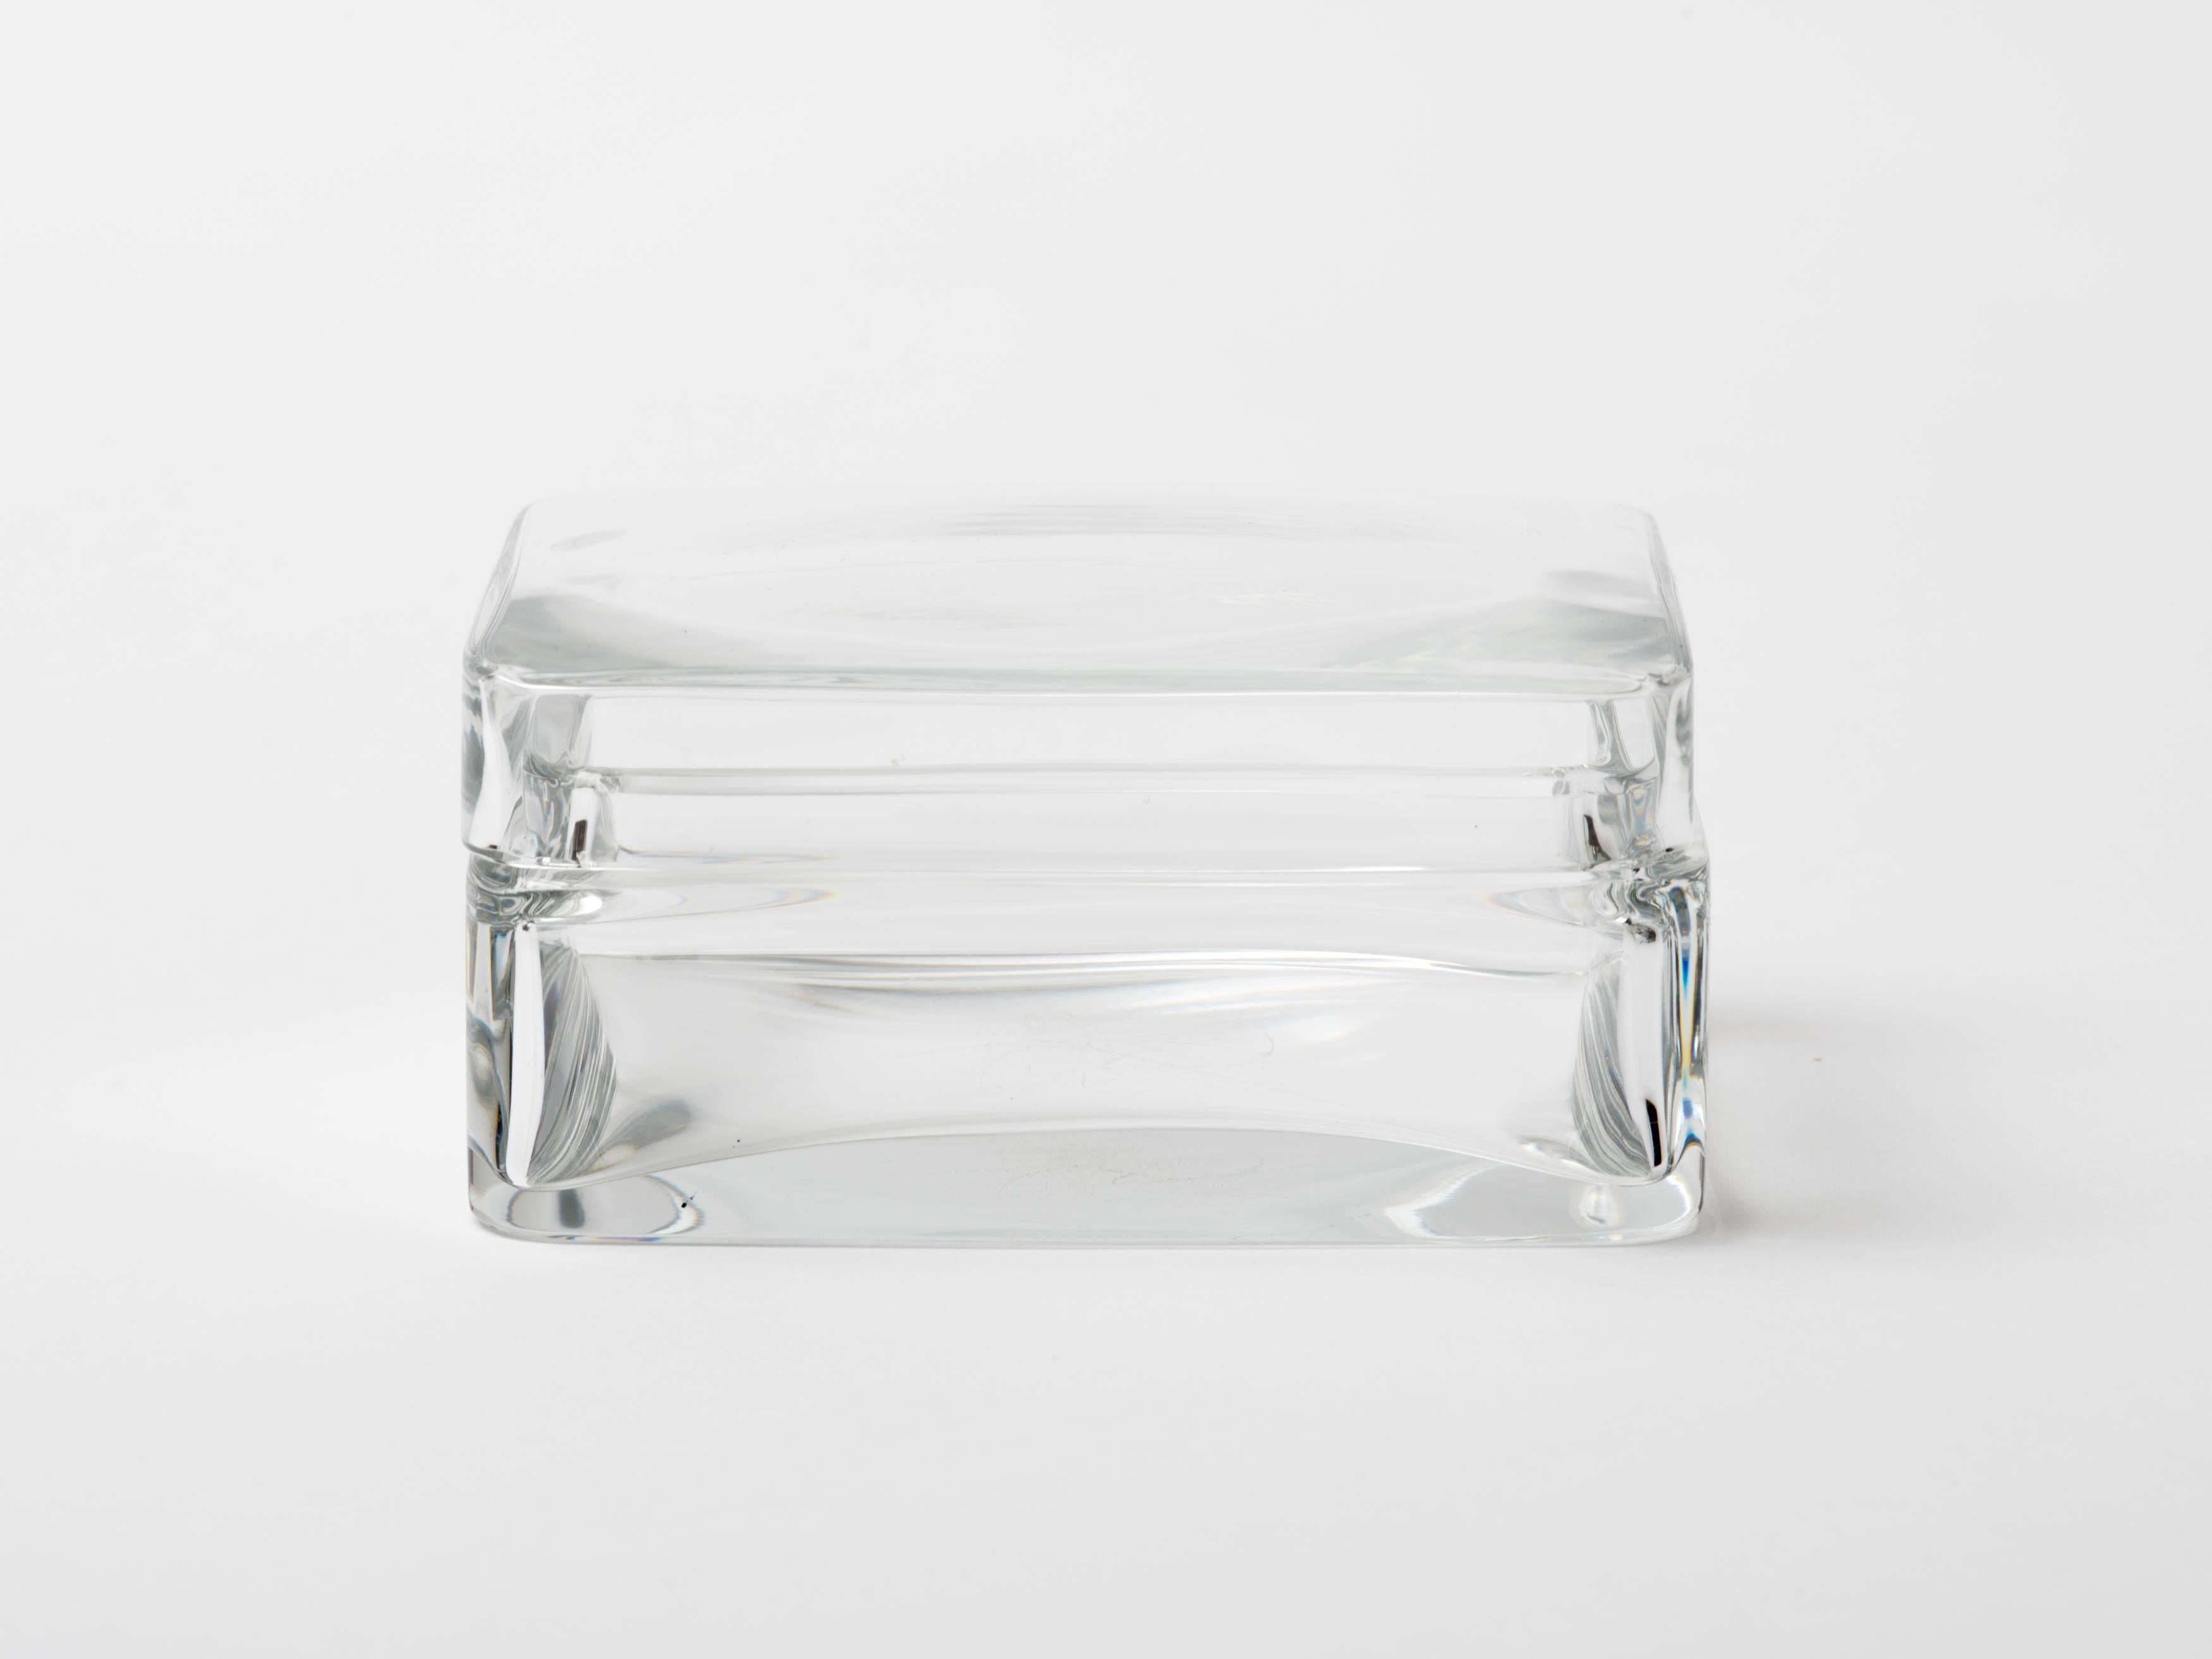 French Baccarat Crystal Lidded Jewelry Trinket Box